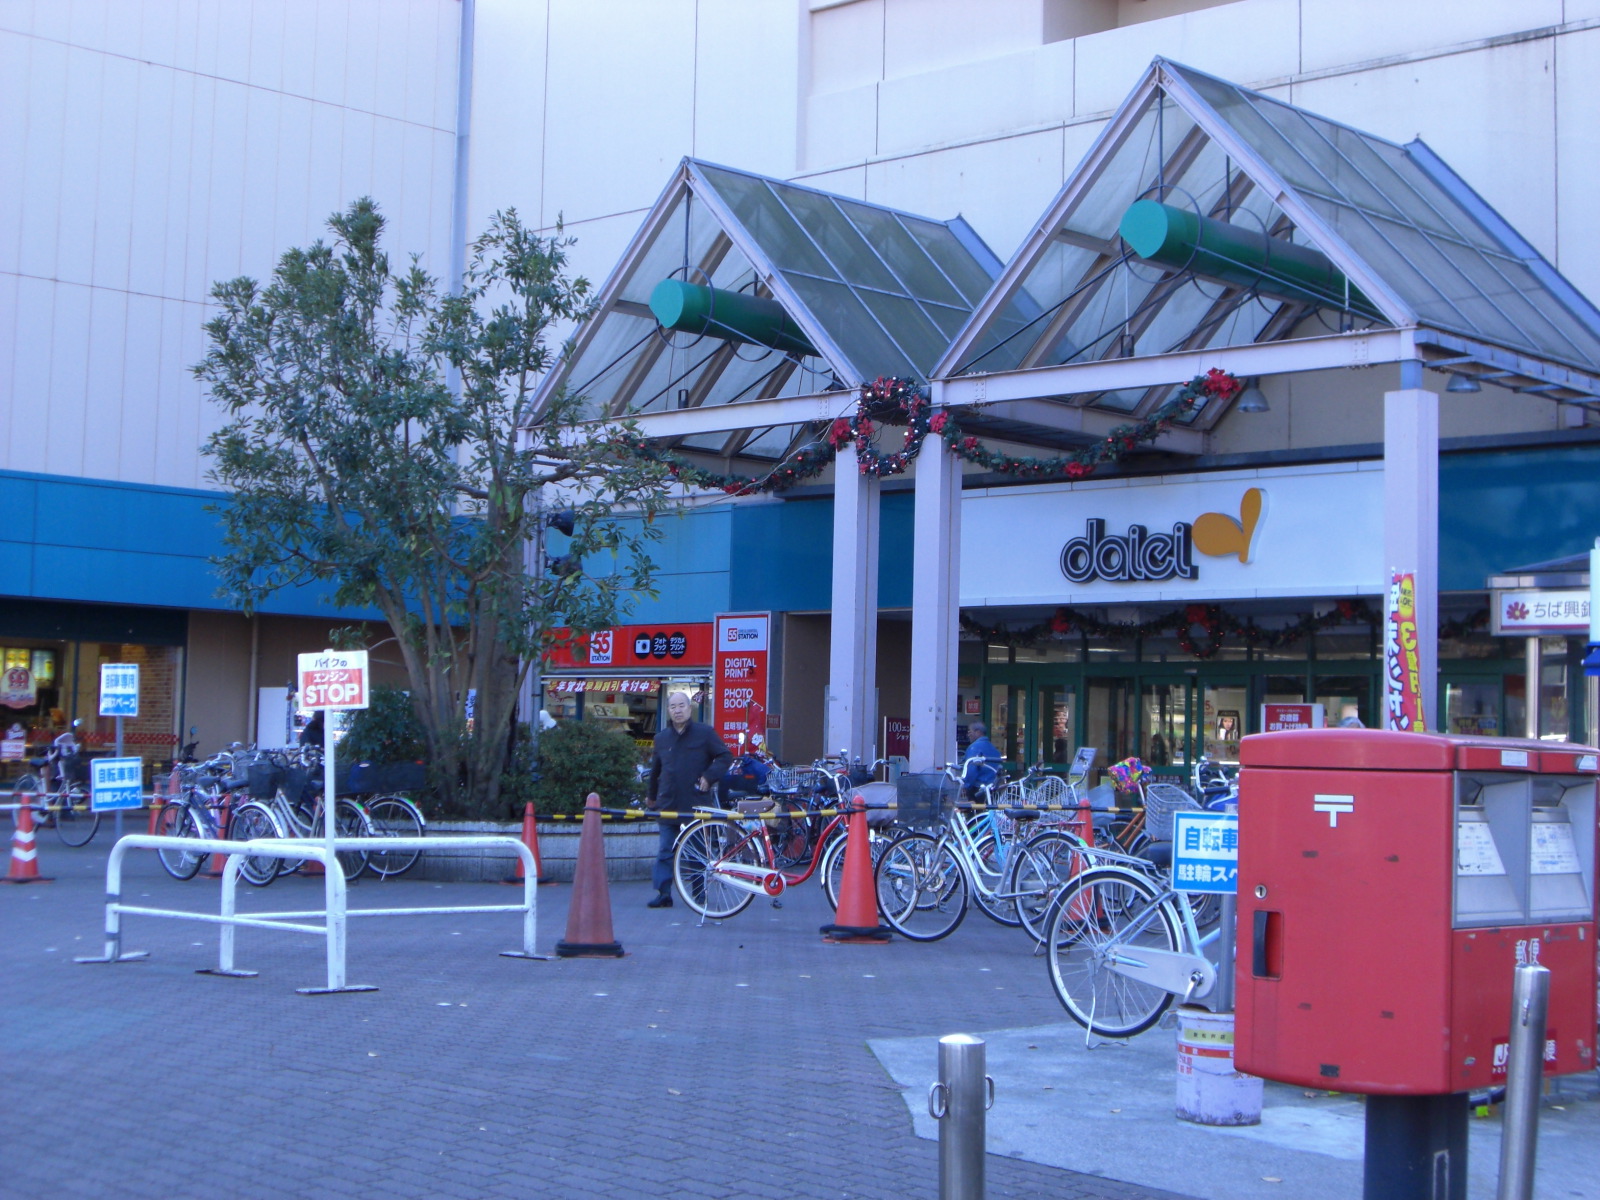 Supermarket. 422m to Daiei Matsudo store (Super)